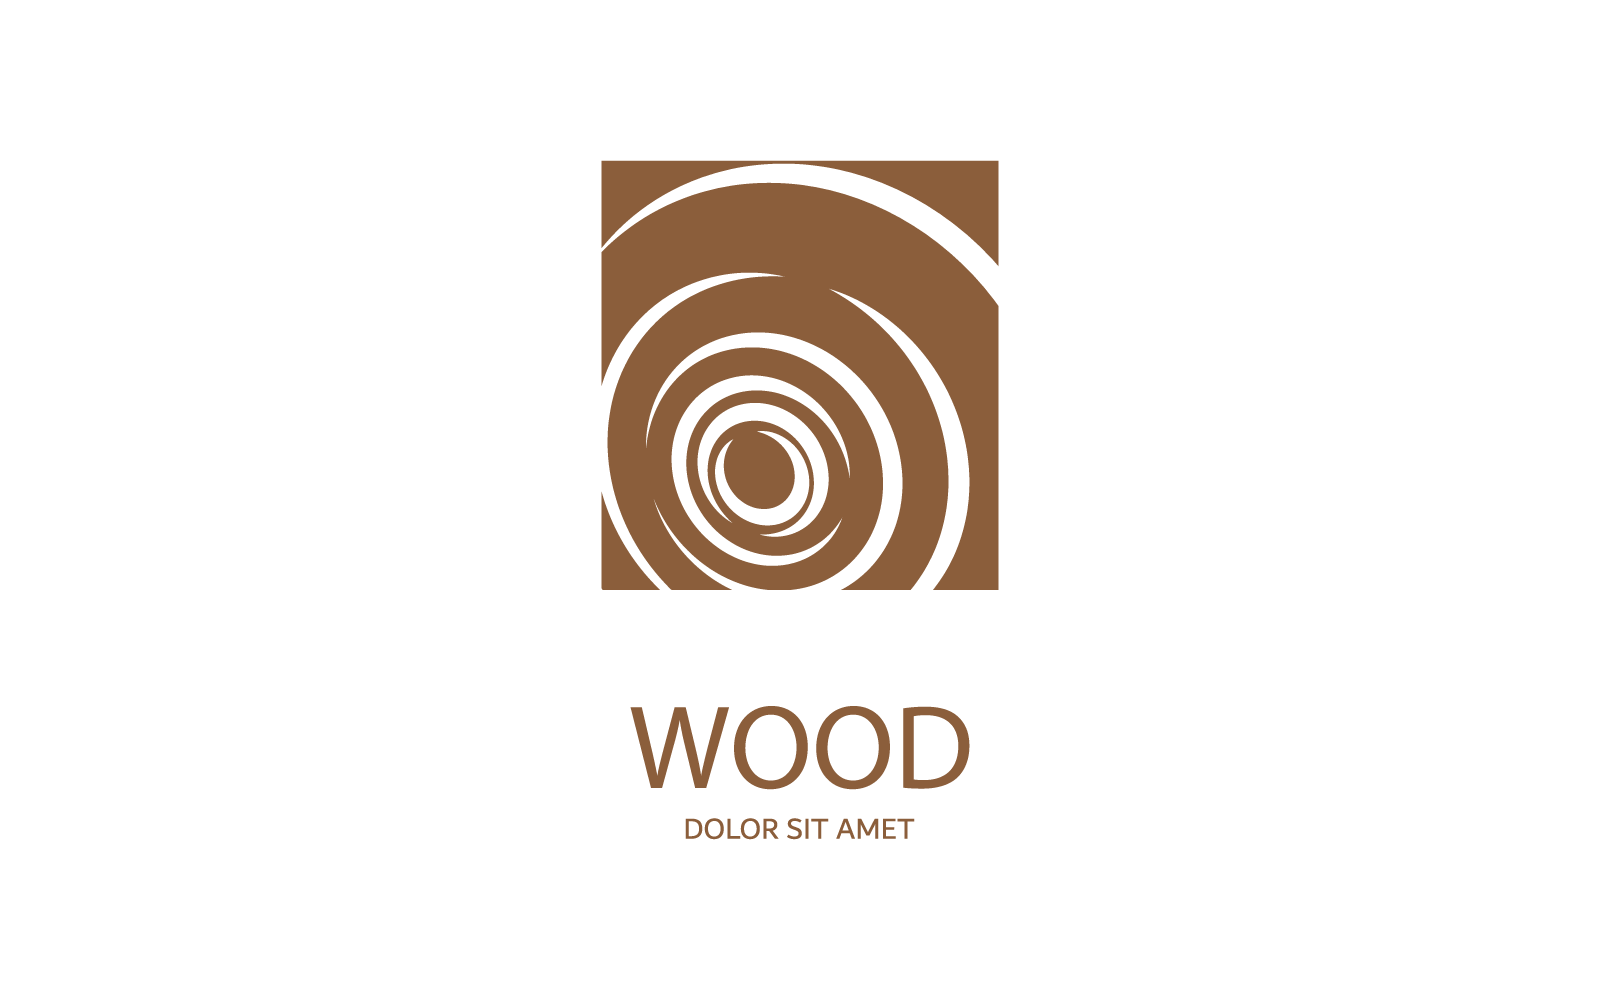 Wood logo illustration icon vector flat design